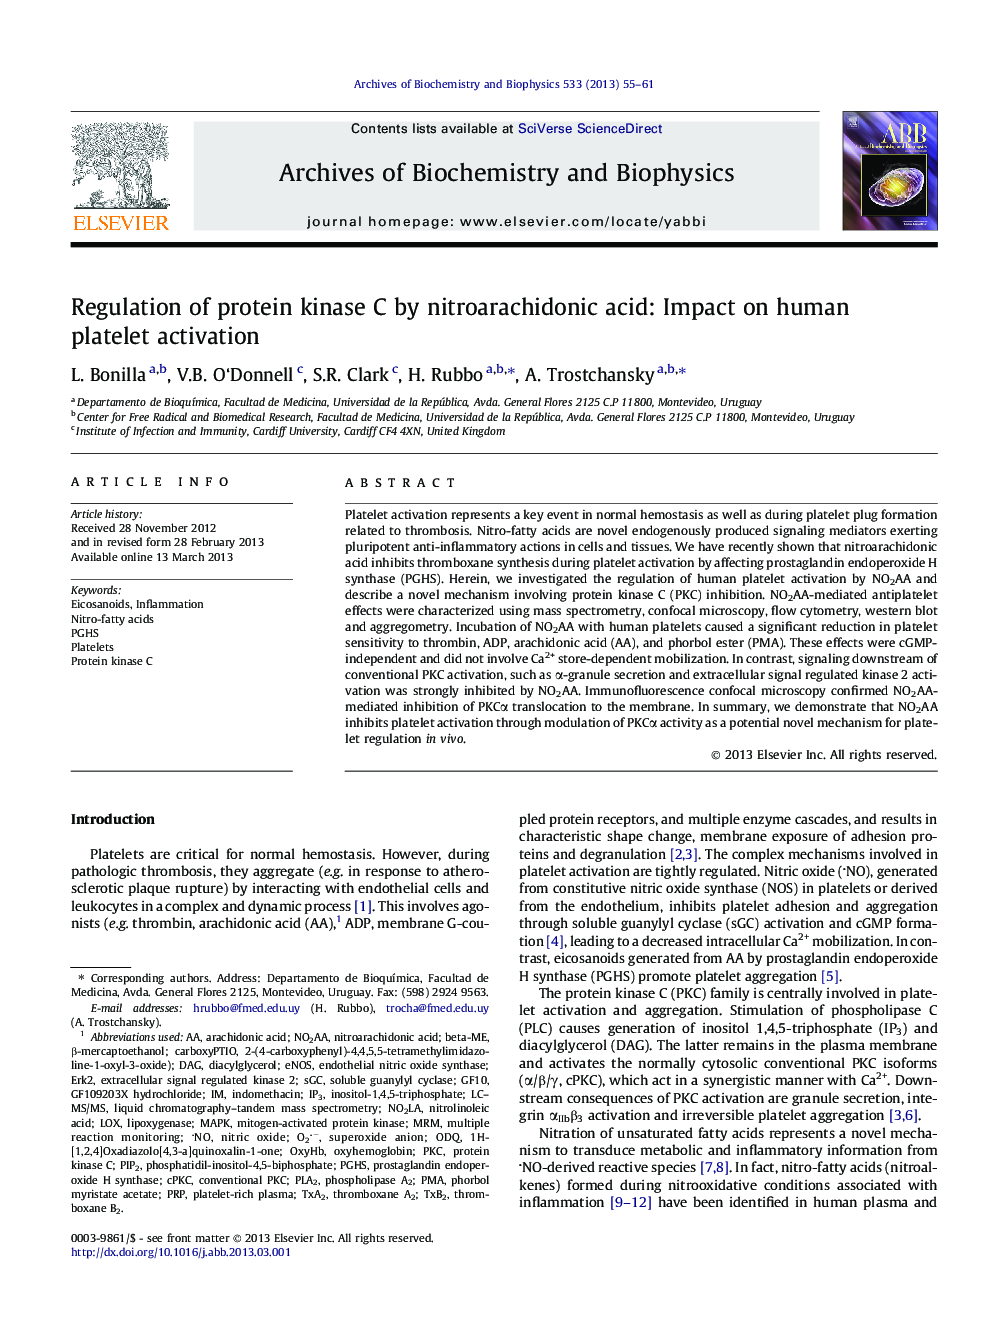 Regulation of protein kinase C by nitroarachidonic acid: Impact on human platelet activation